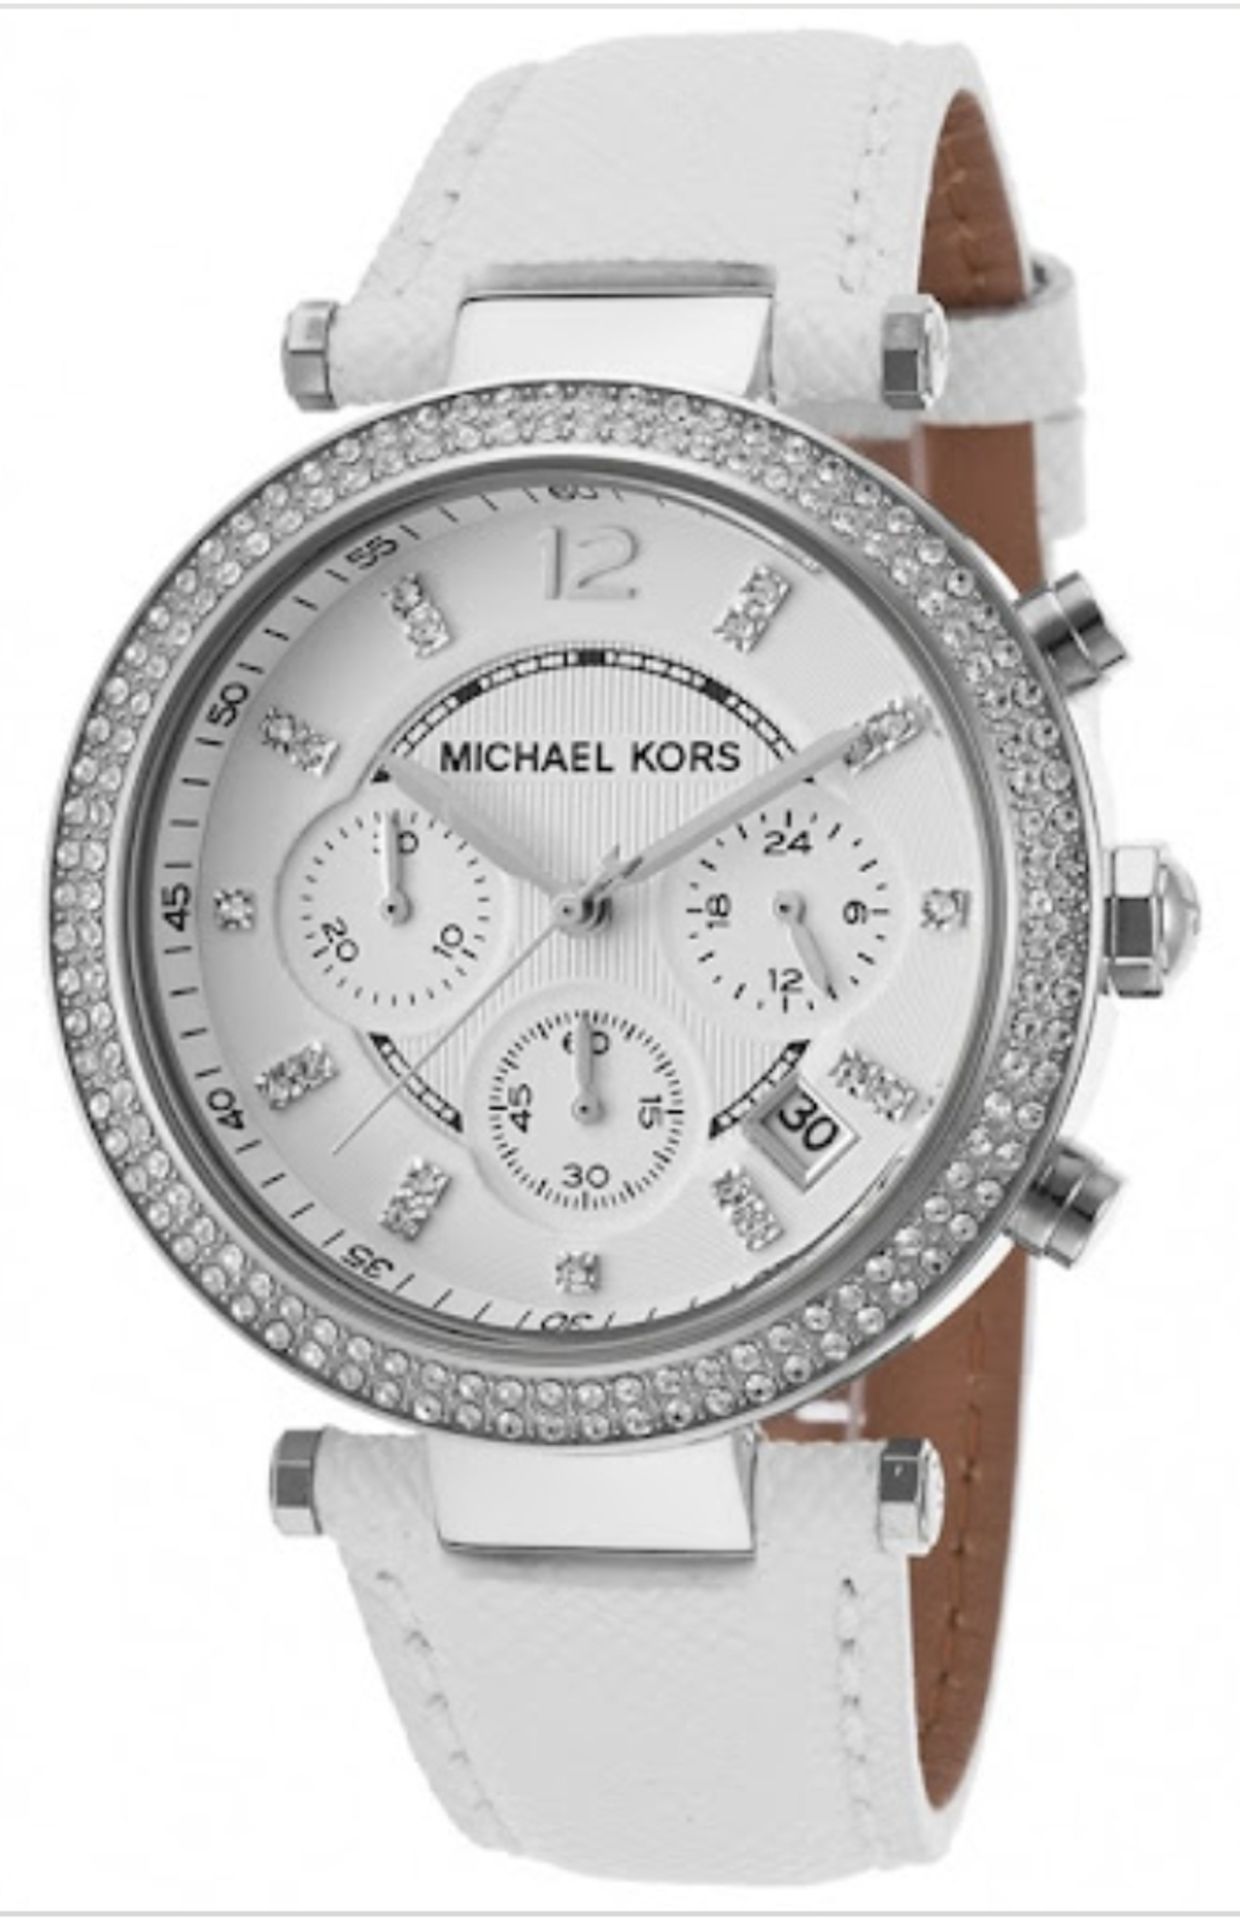 Michael Kors MK2277 Ladies Parker White Leather Strap quartz Chronograph Designer Watch - Image 5 of 6